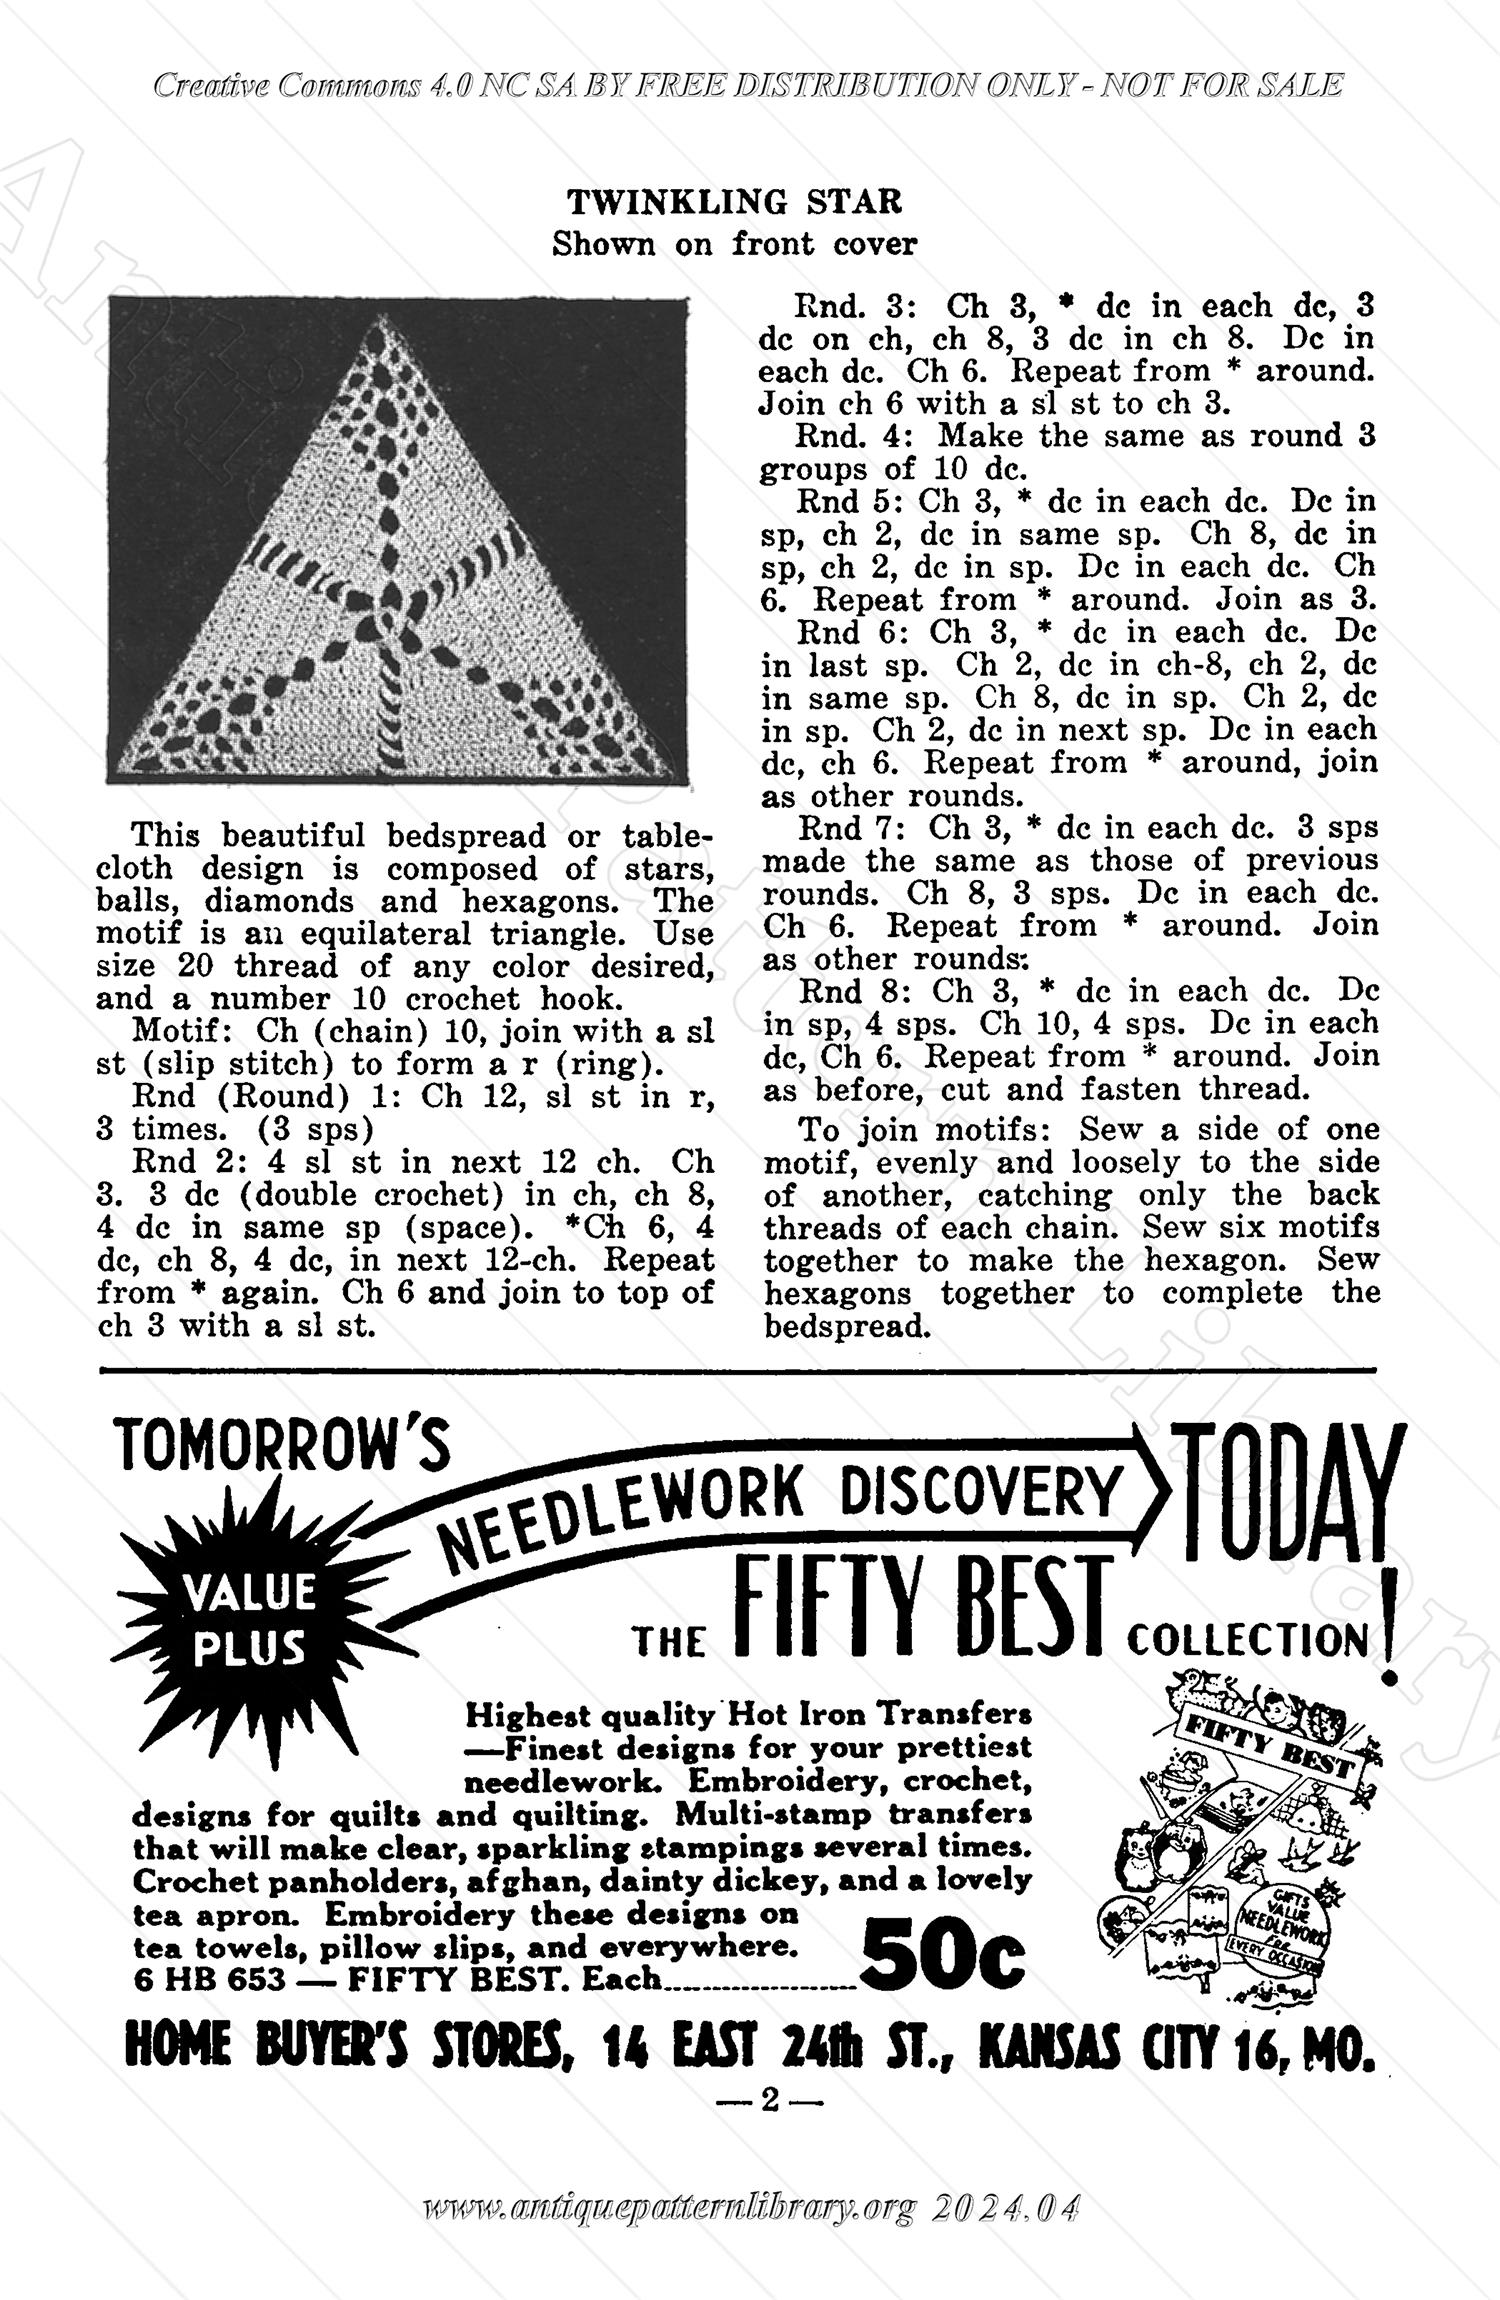 I-WB12B The Workbasket Vol. 12 August 1947 No. 11